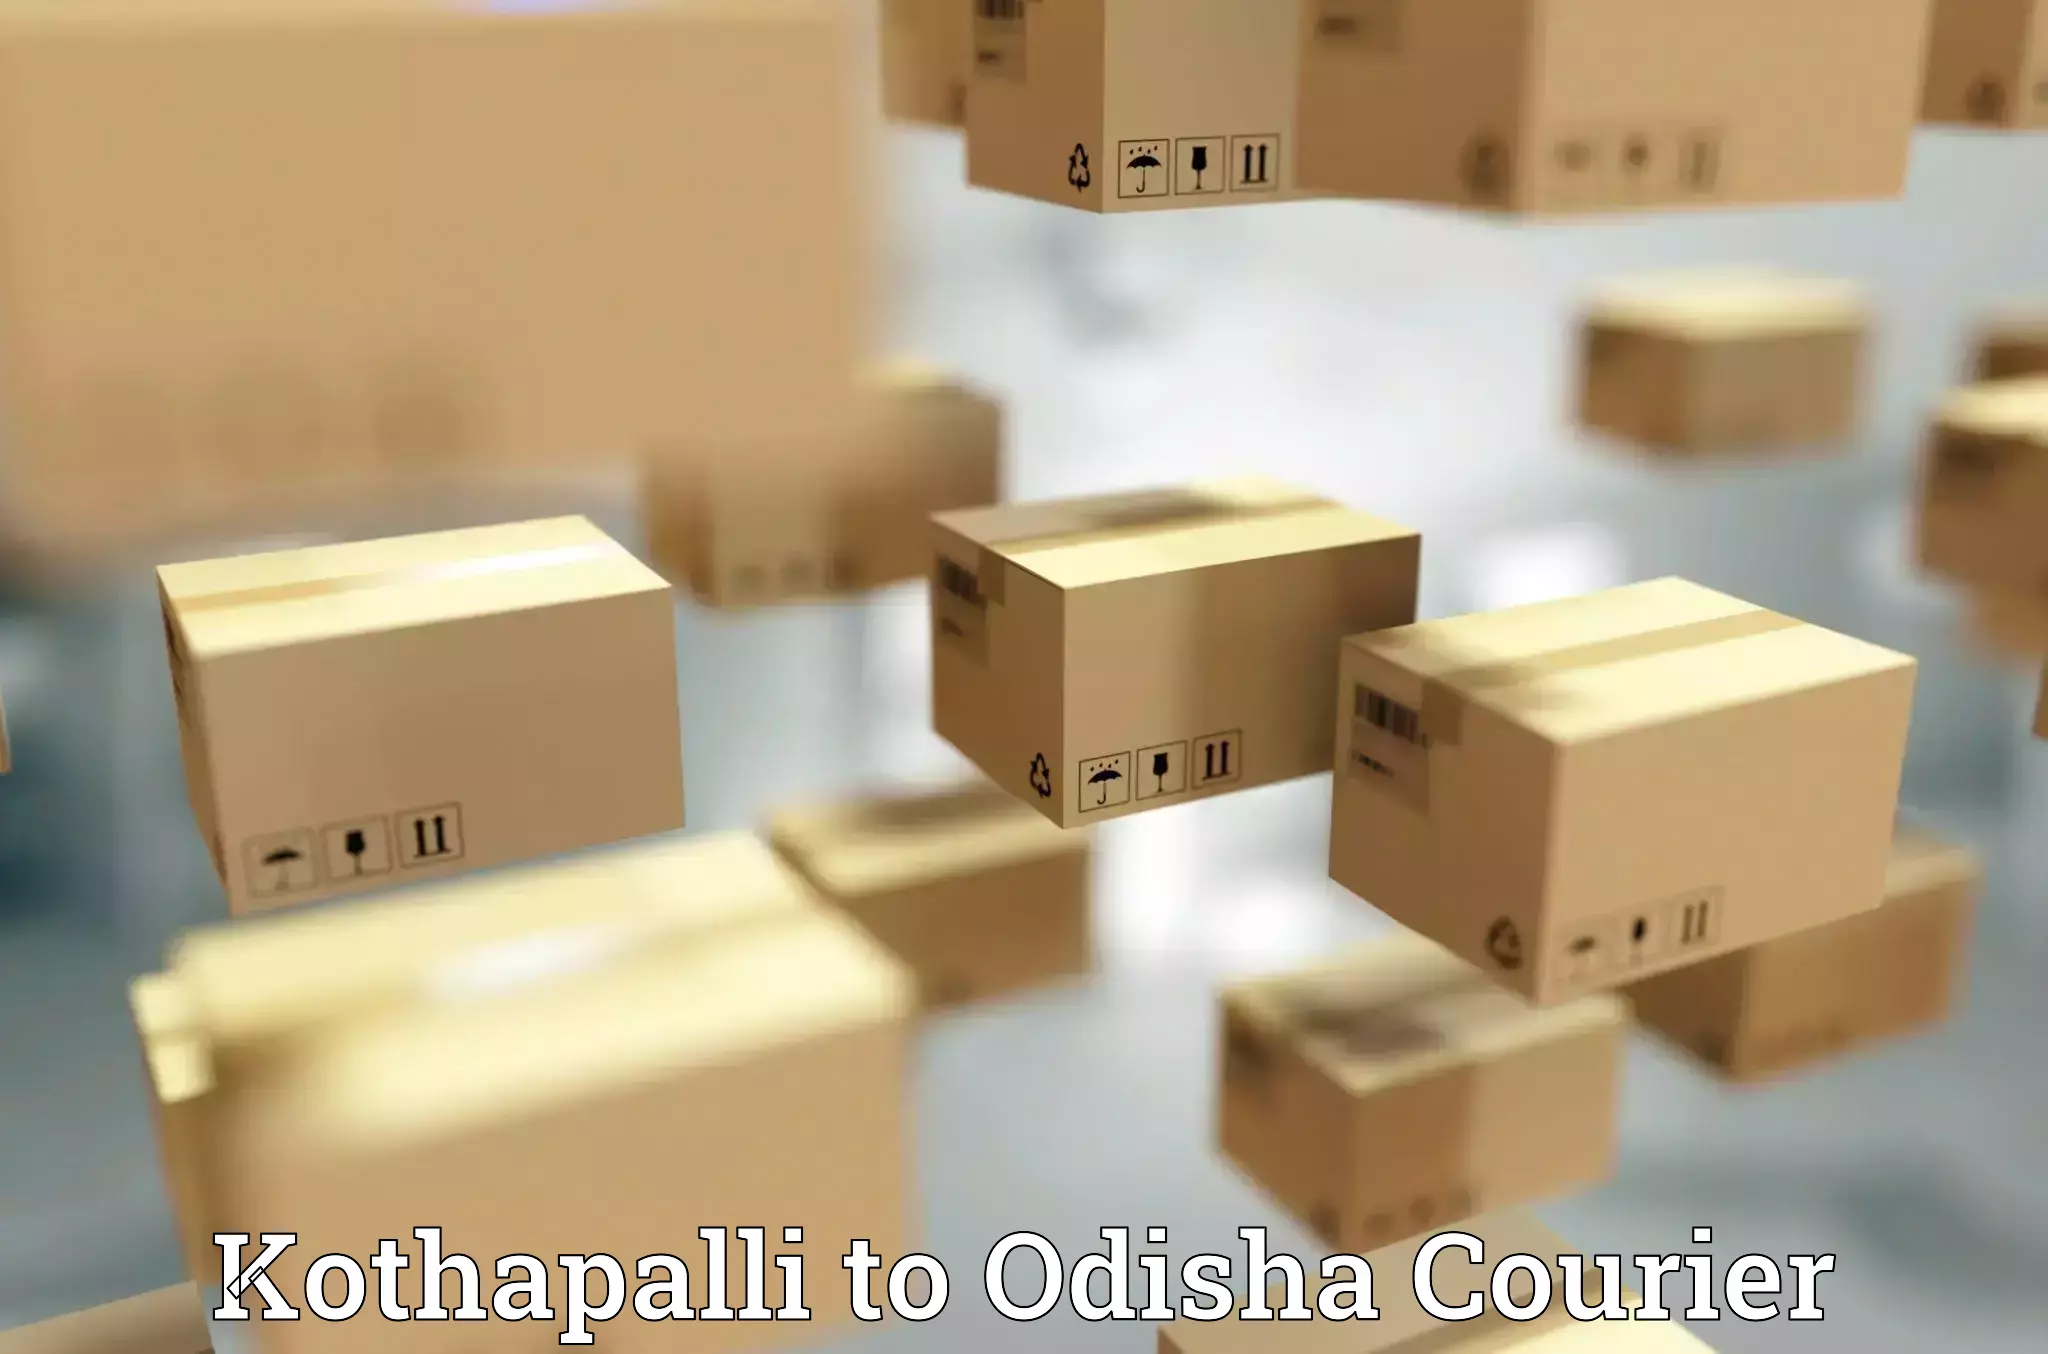 Professional courier handling Kothapalli to Koraput